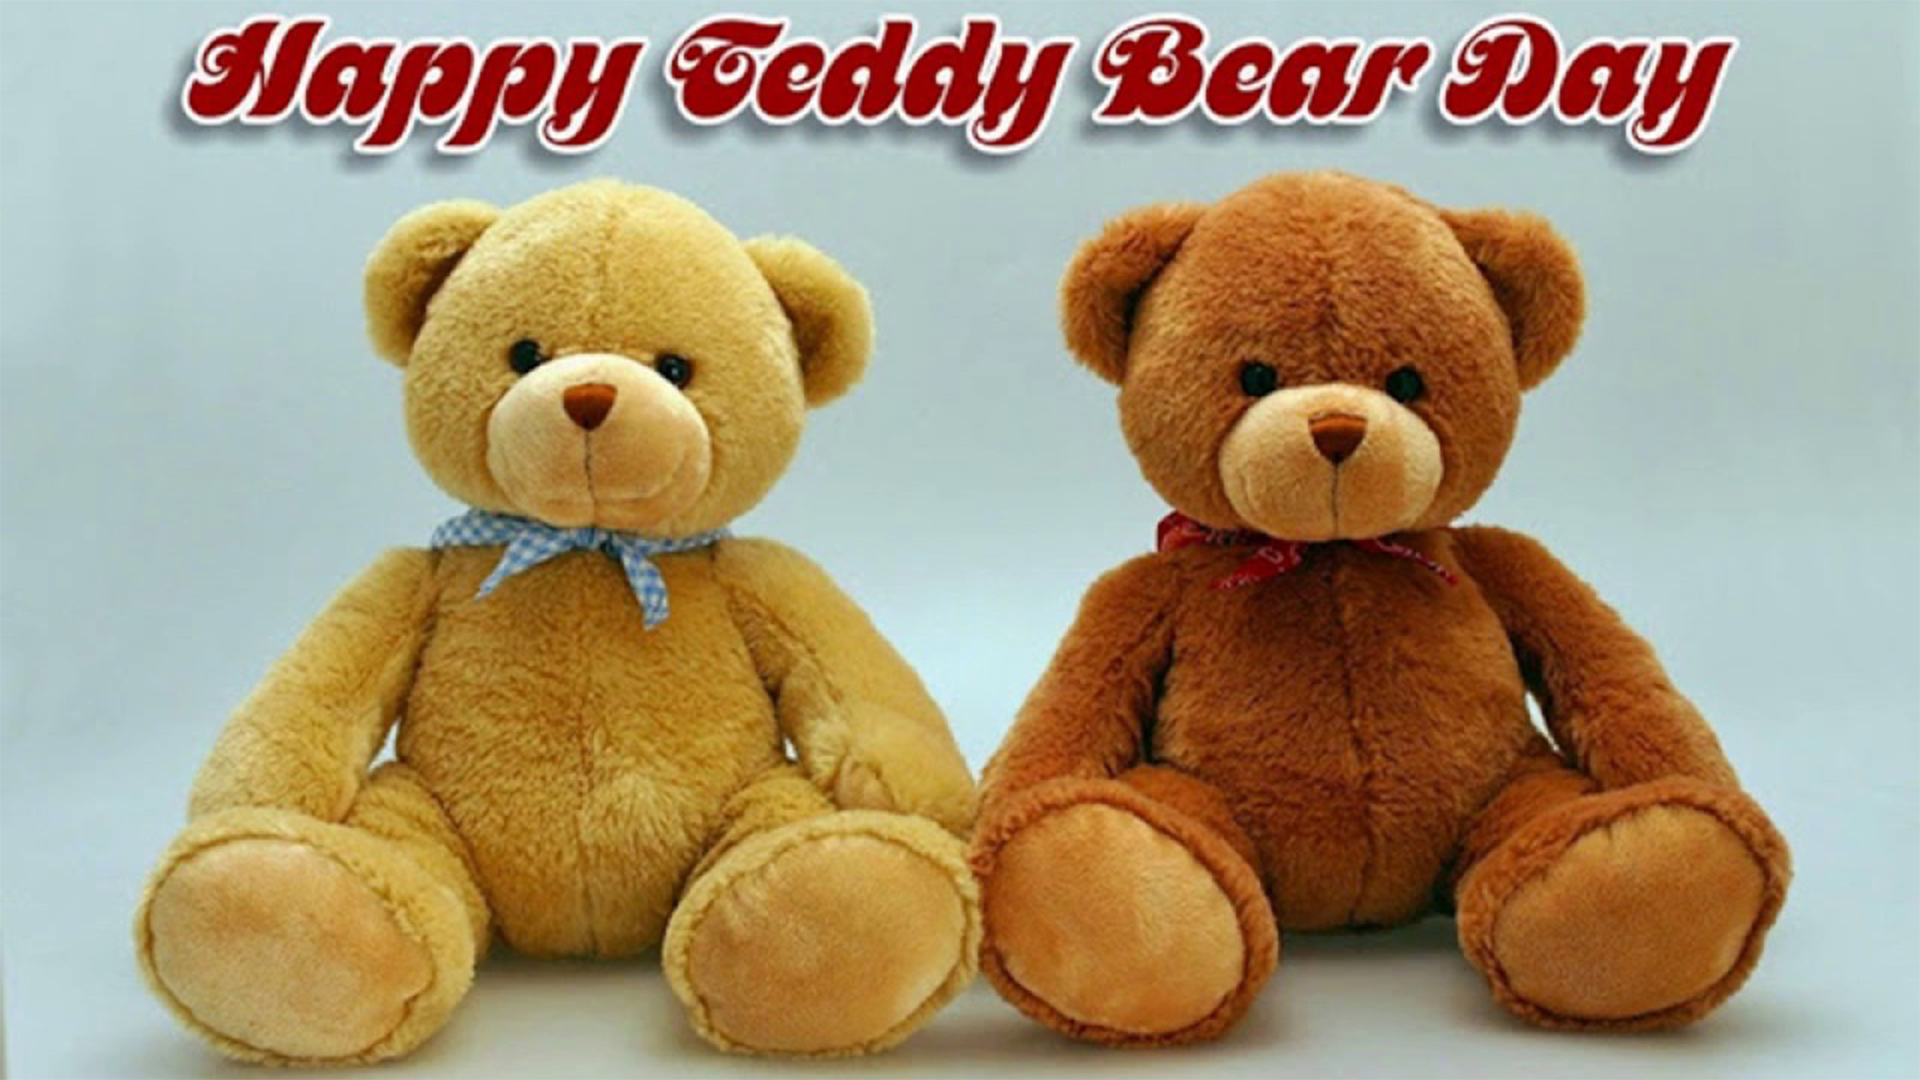 happy teddy day 2018 image